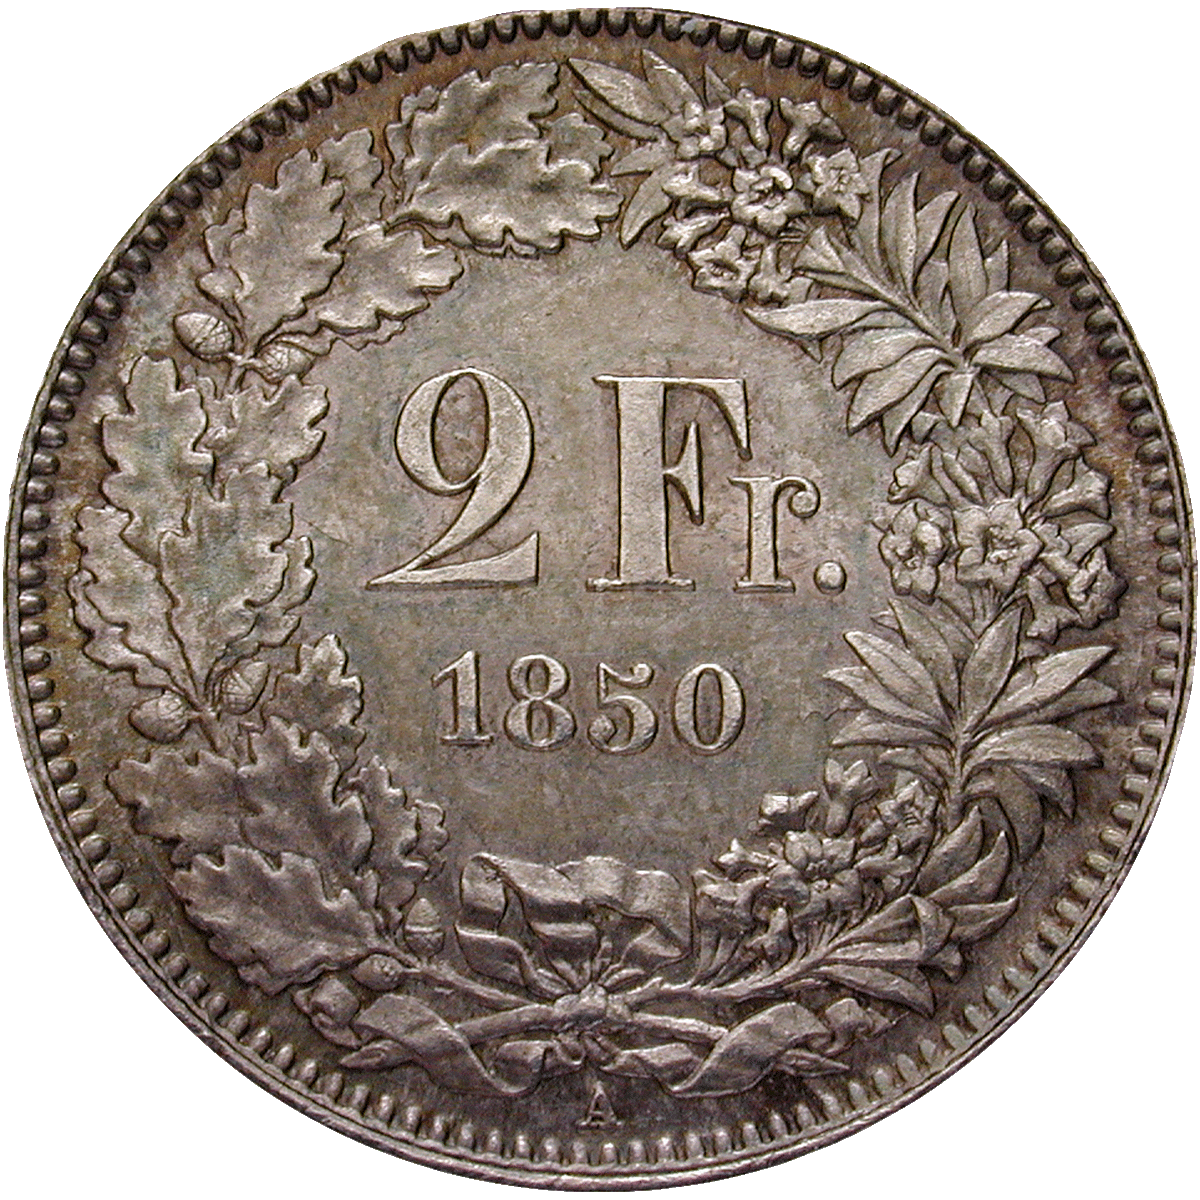 Schweizerische Eidgenossenschaft, 2 Franken 1850 (reverse)